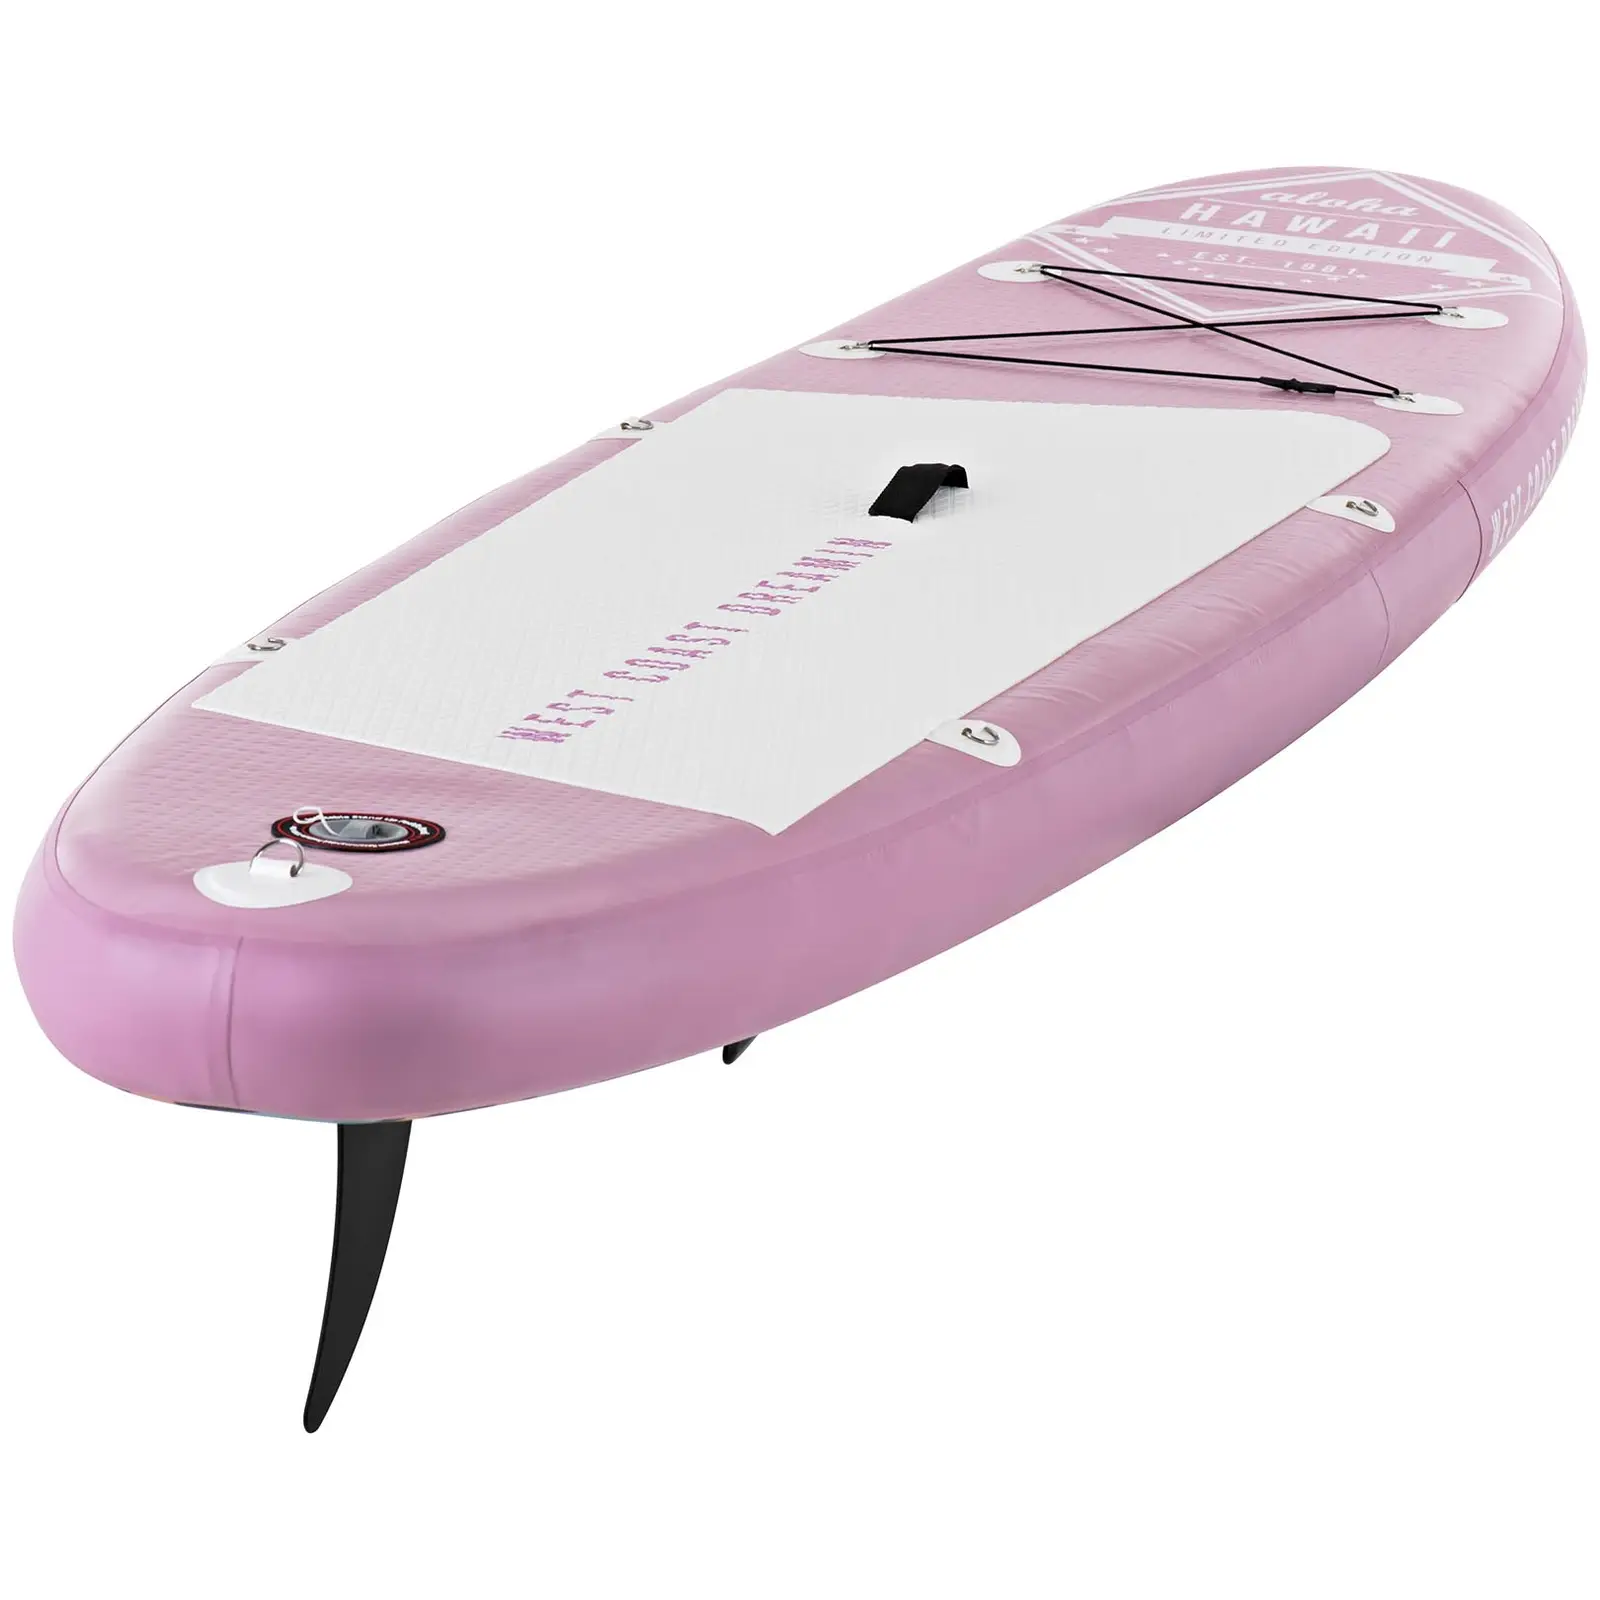 Paddle-board - 100 kg - oppusteligt - lyserødt